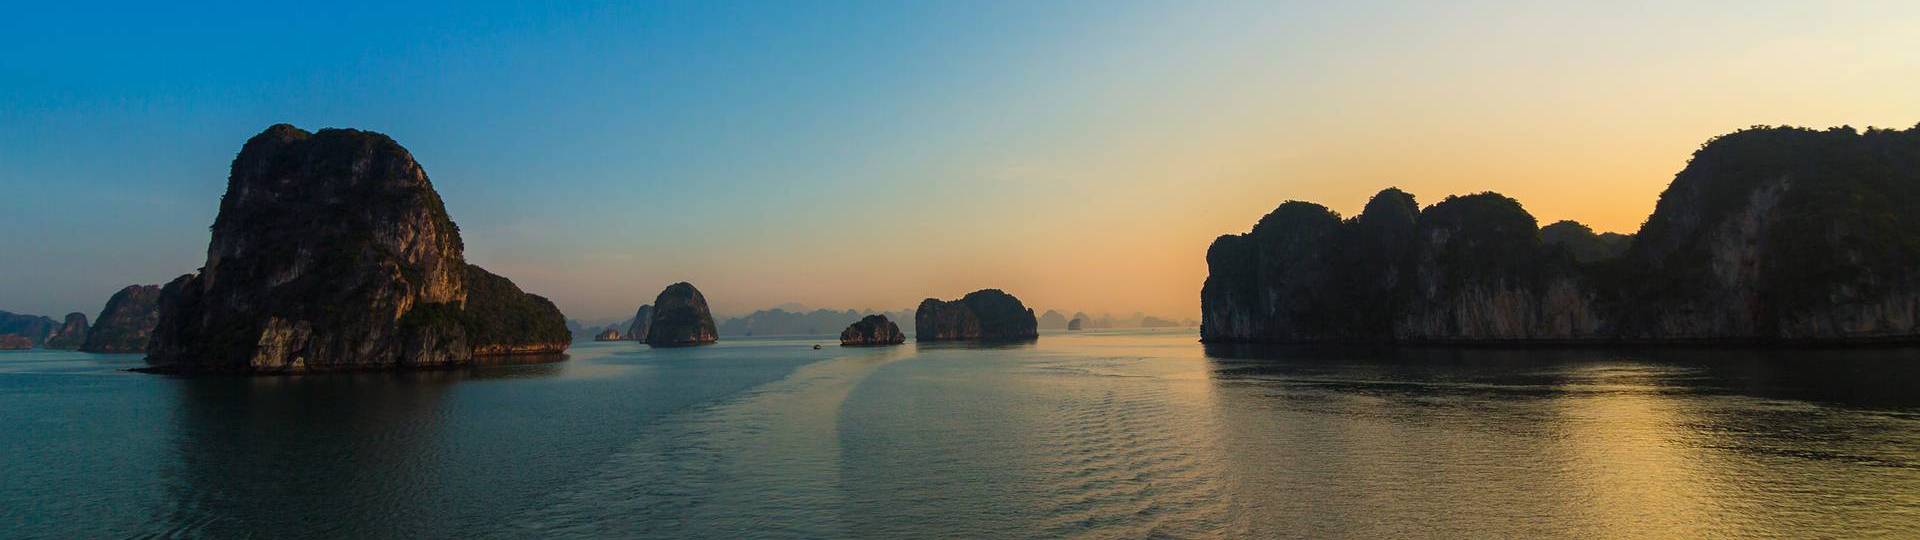 Hanoi to Halong Bay Cruise Tour